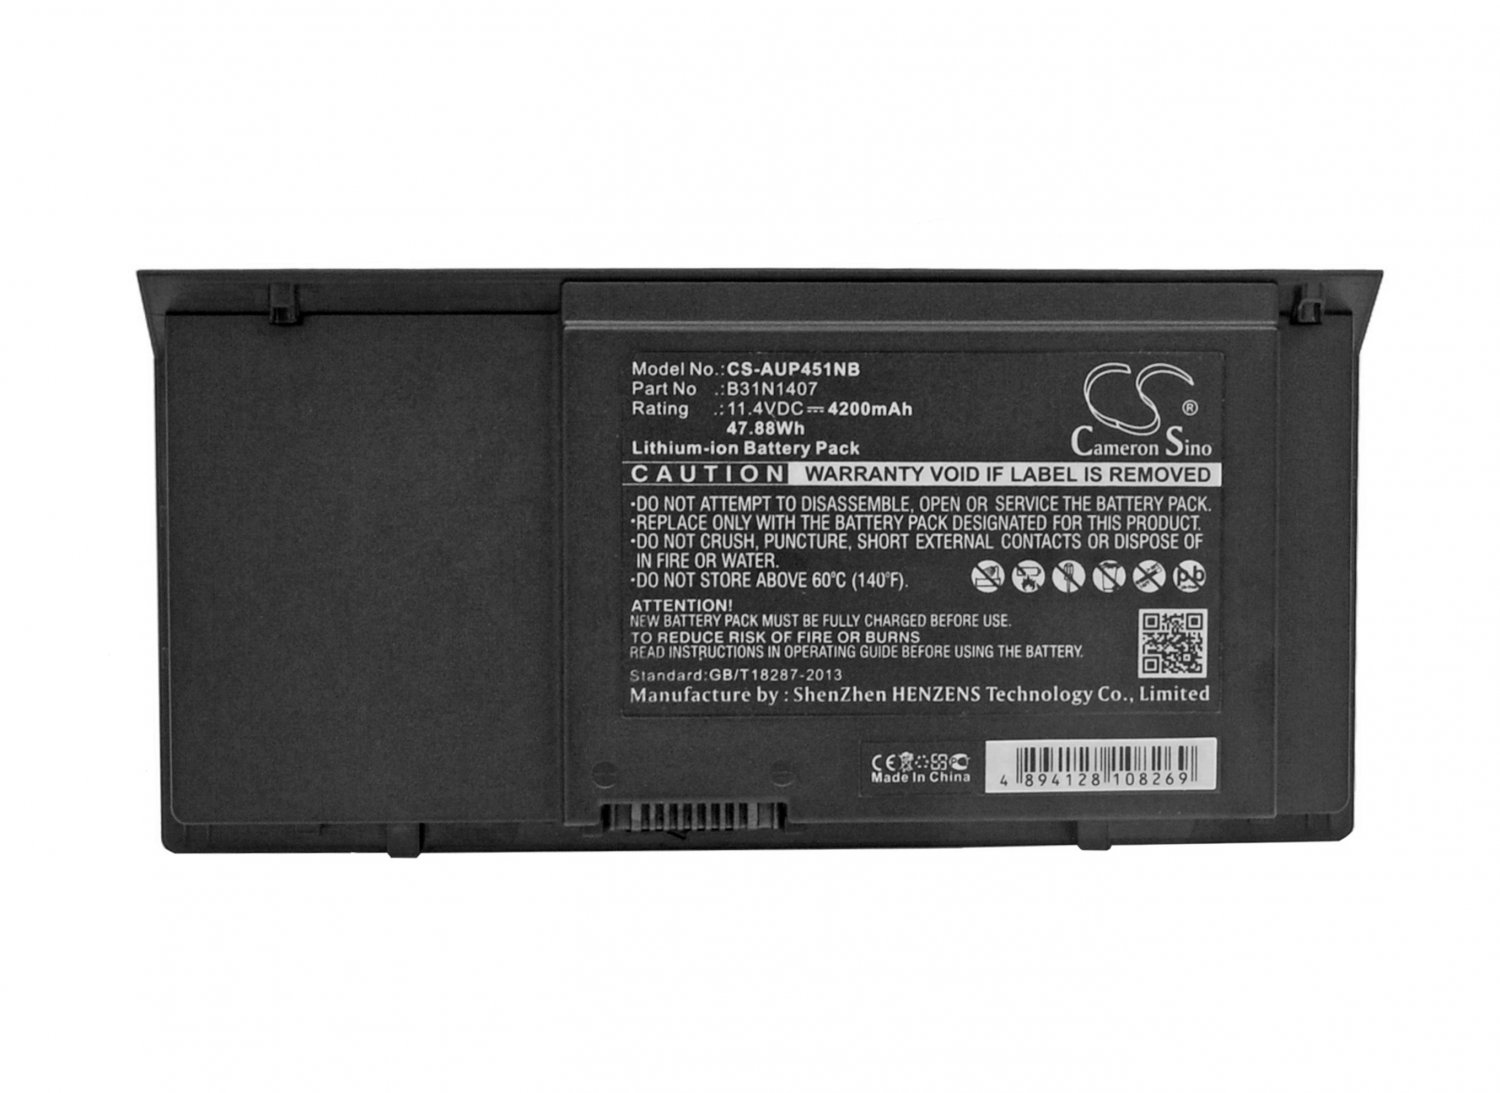 A696 ASUS Battery. 0b200-04100000 аккумулятор ASUS. 451-NB. ASUS Pro g46vw аккумулятор. Eigen b451b